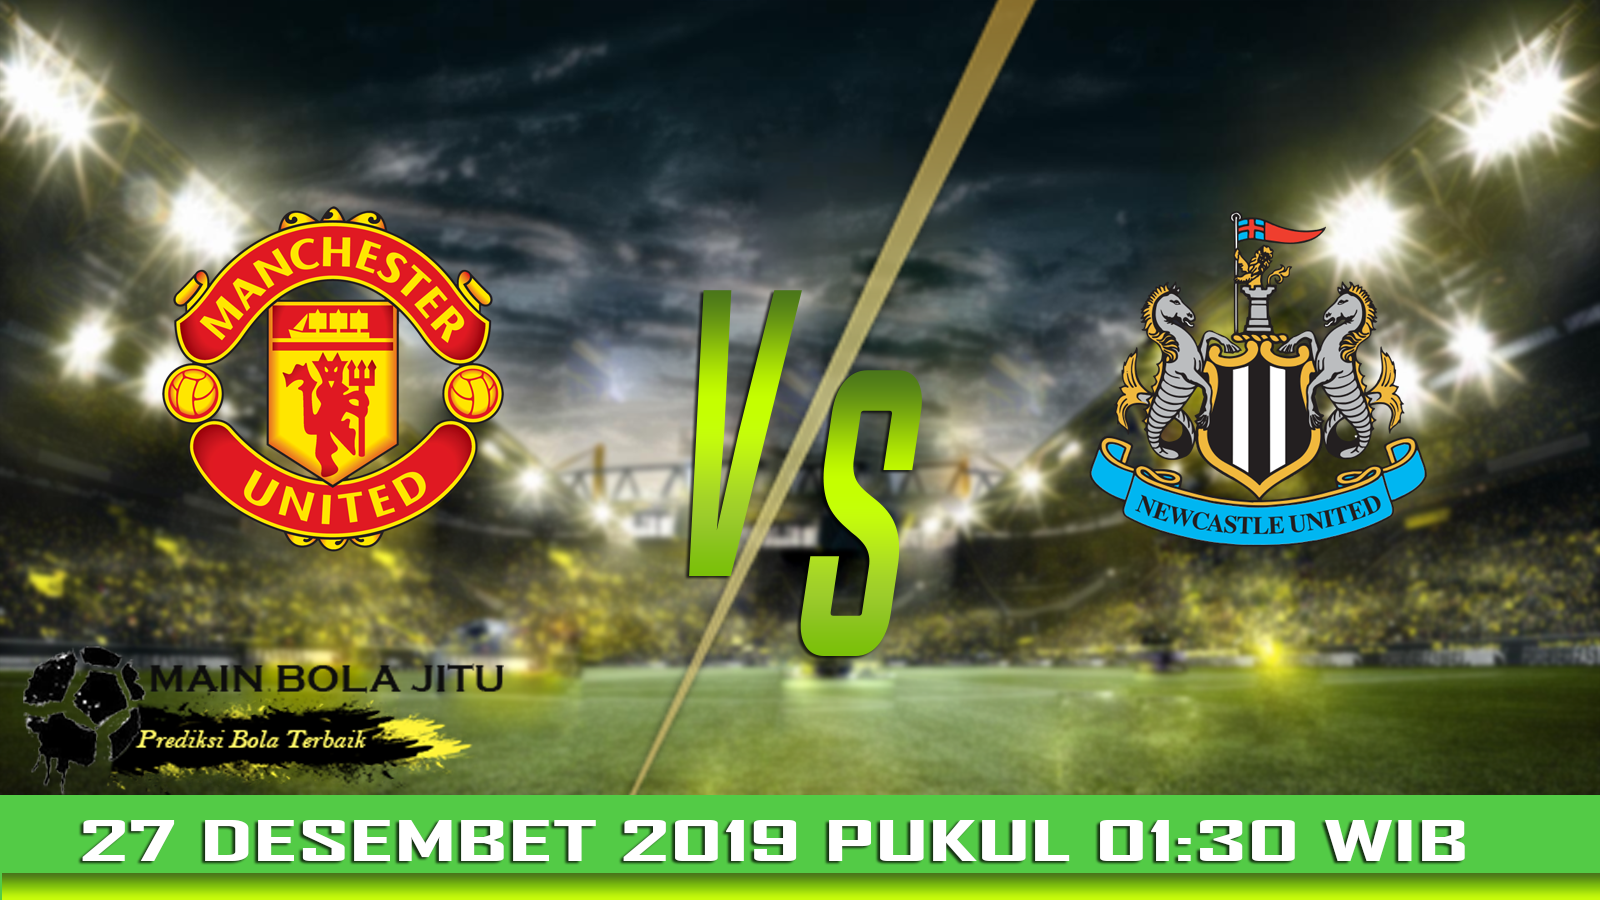 Prediksi Bola Manchester United vs Newcastle tanggal 27-12-2019